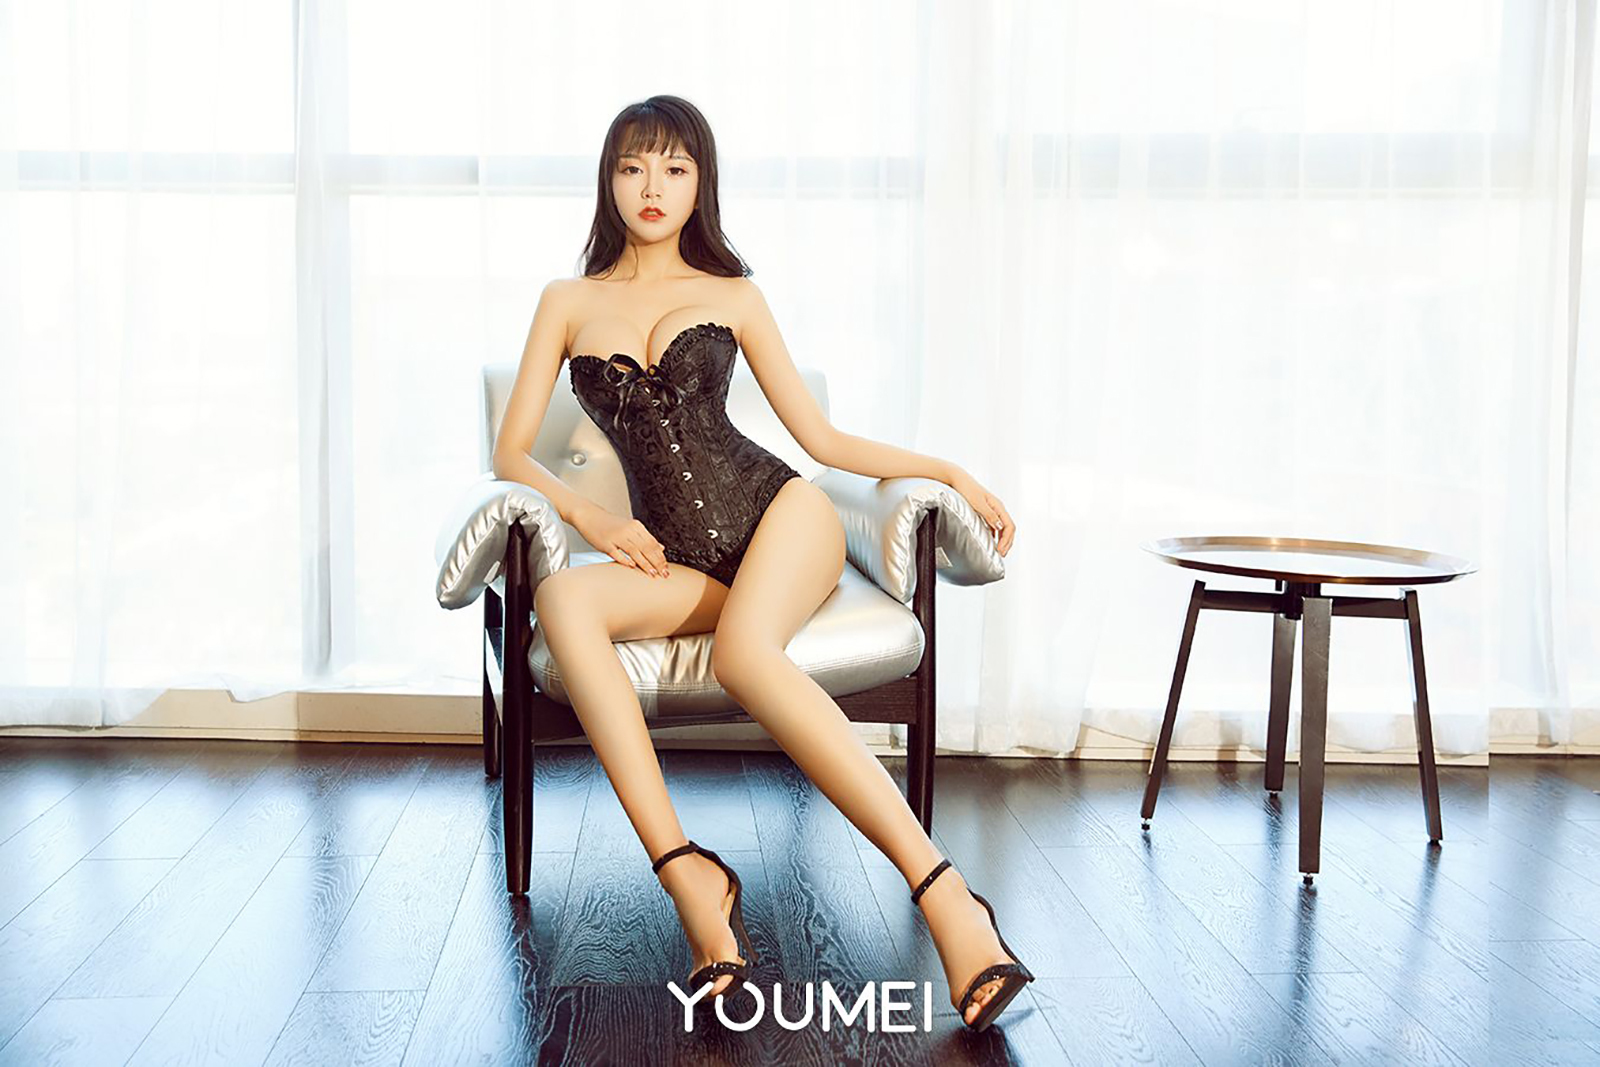 [Youmei Youmei] no.047, August 13, 2018